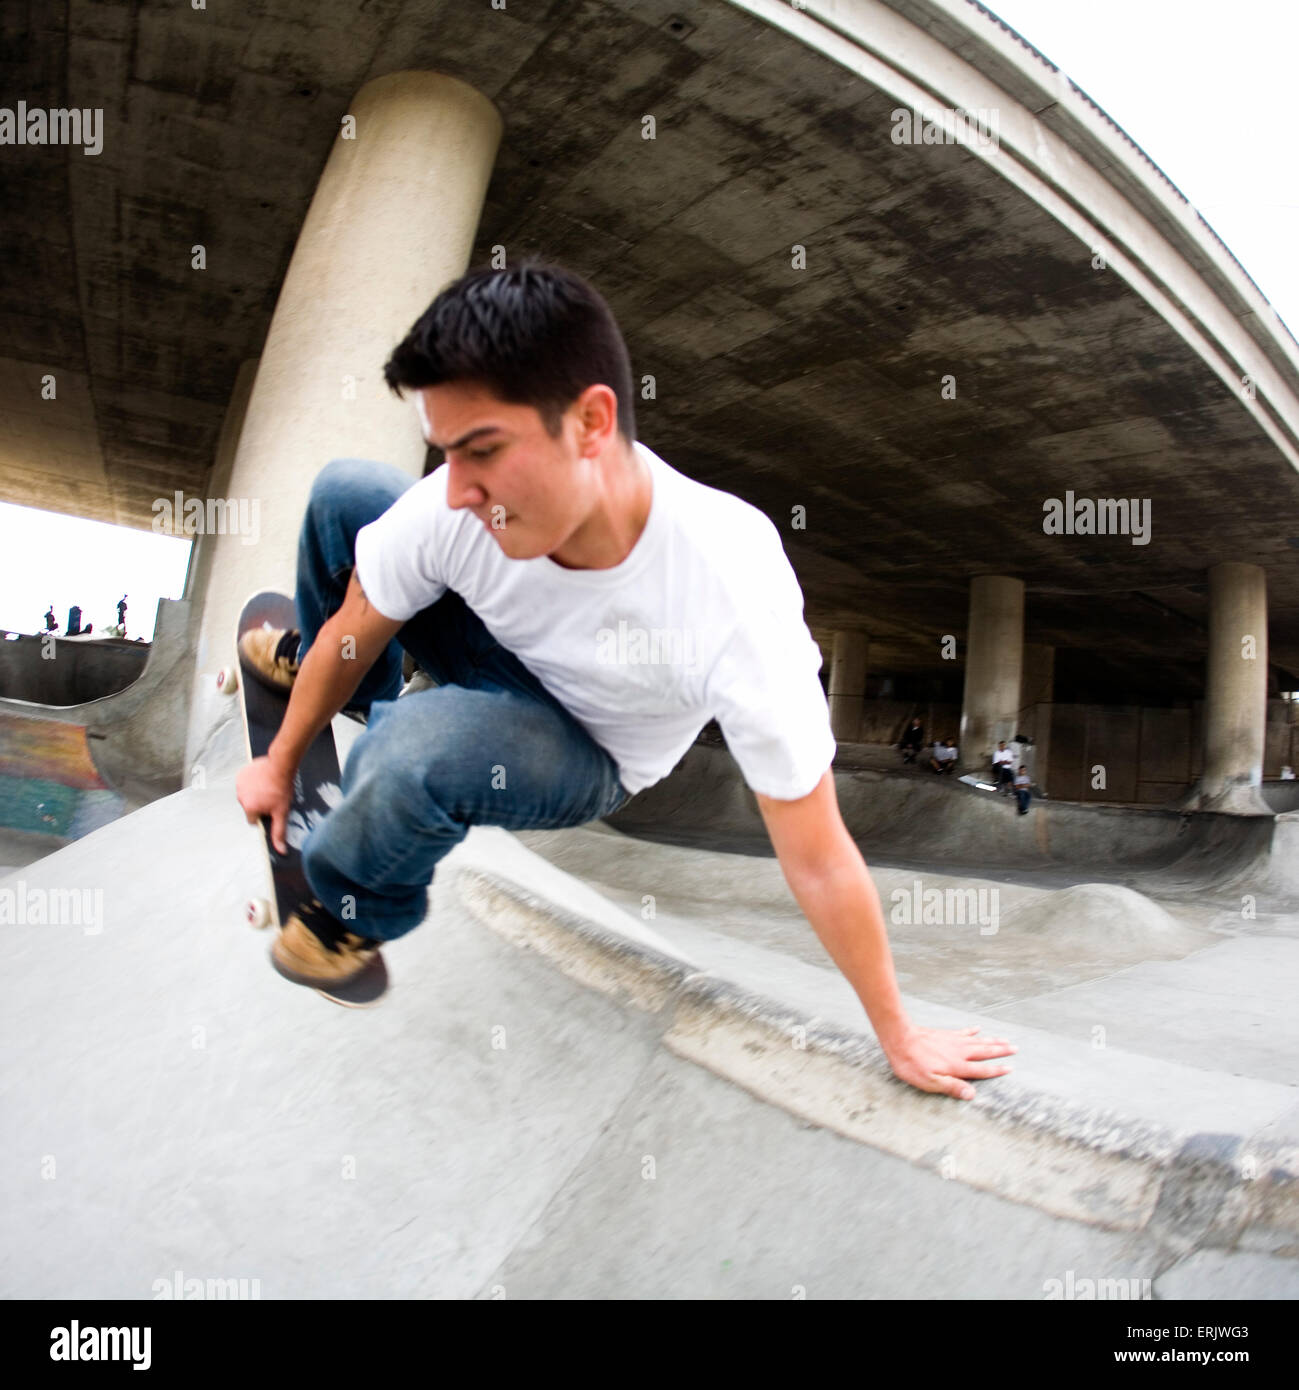 Skateboarding session in an urban skatepark Stock Photo